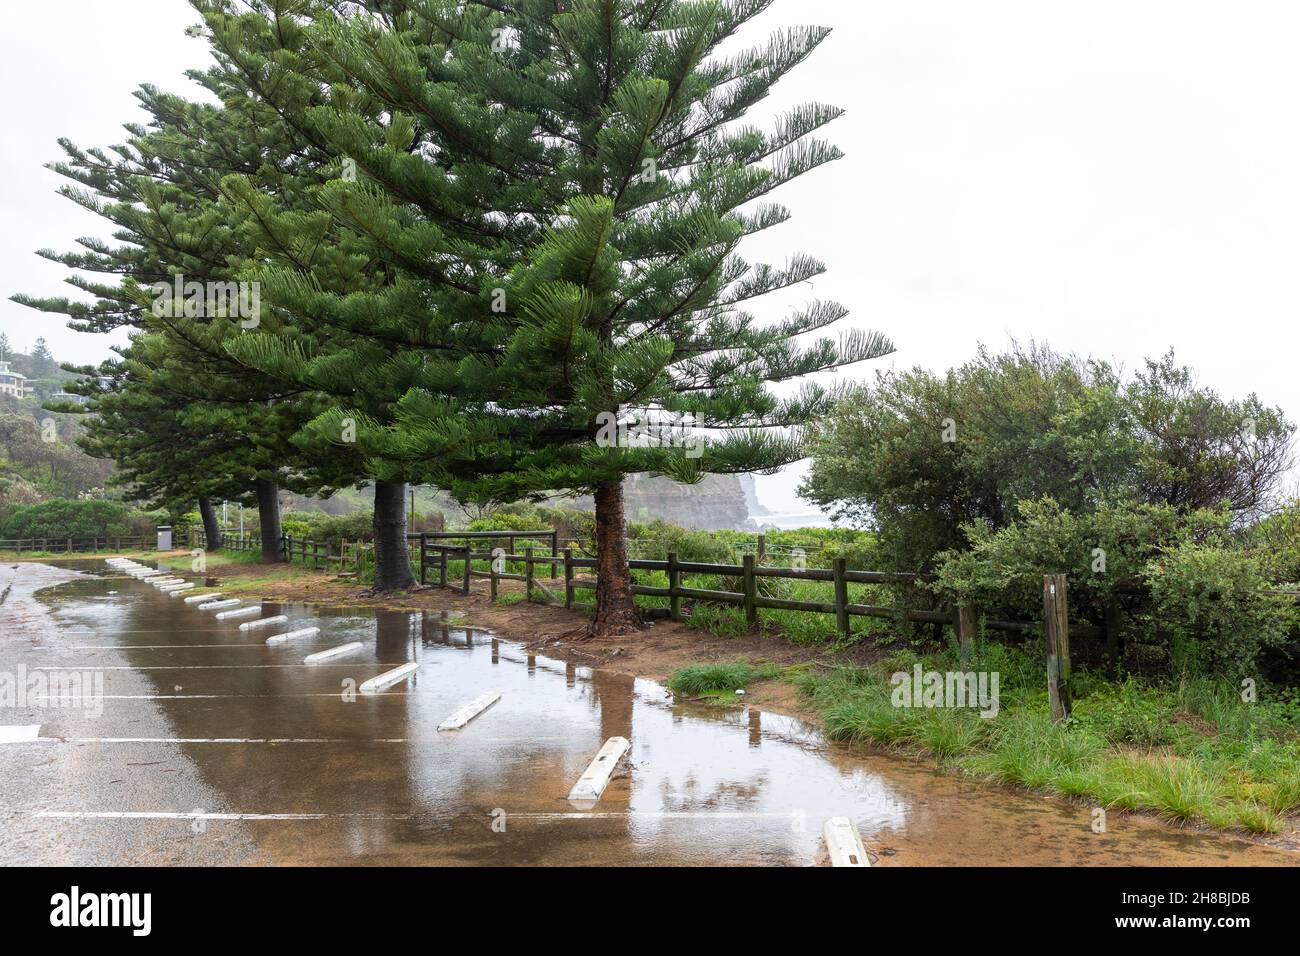 Australia Sydney wet spring weather as a La Nina/El Nino weather event is announced bringing wet weather to australia in spring and summer,Sydney Stock Photo